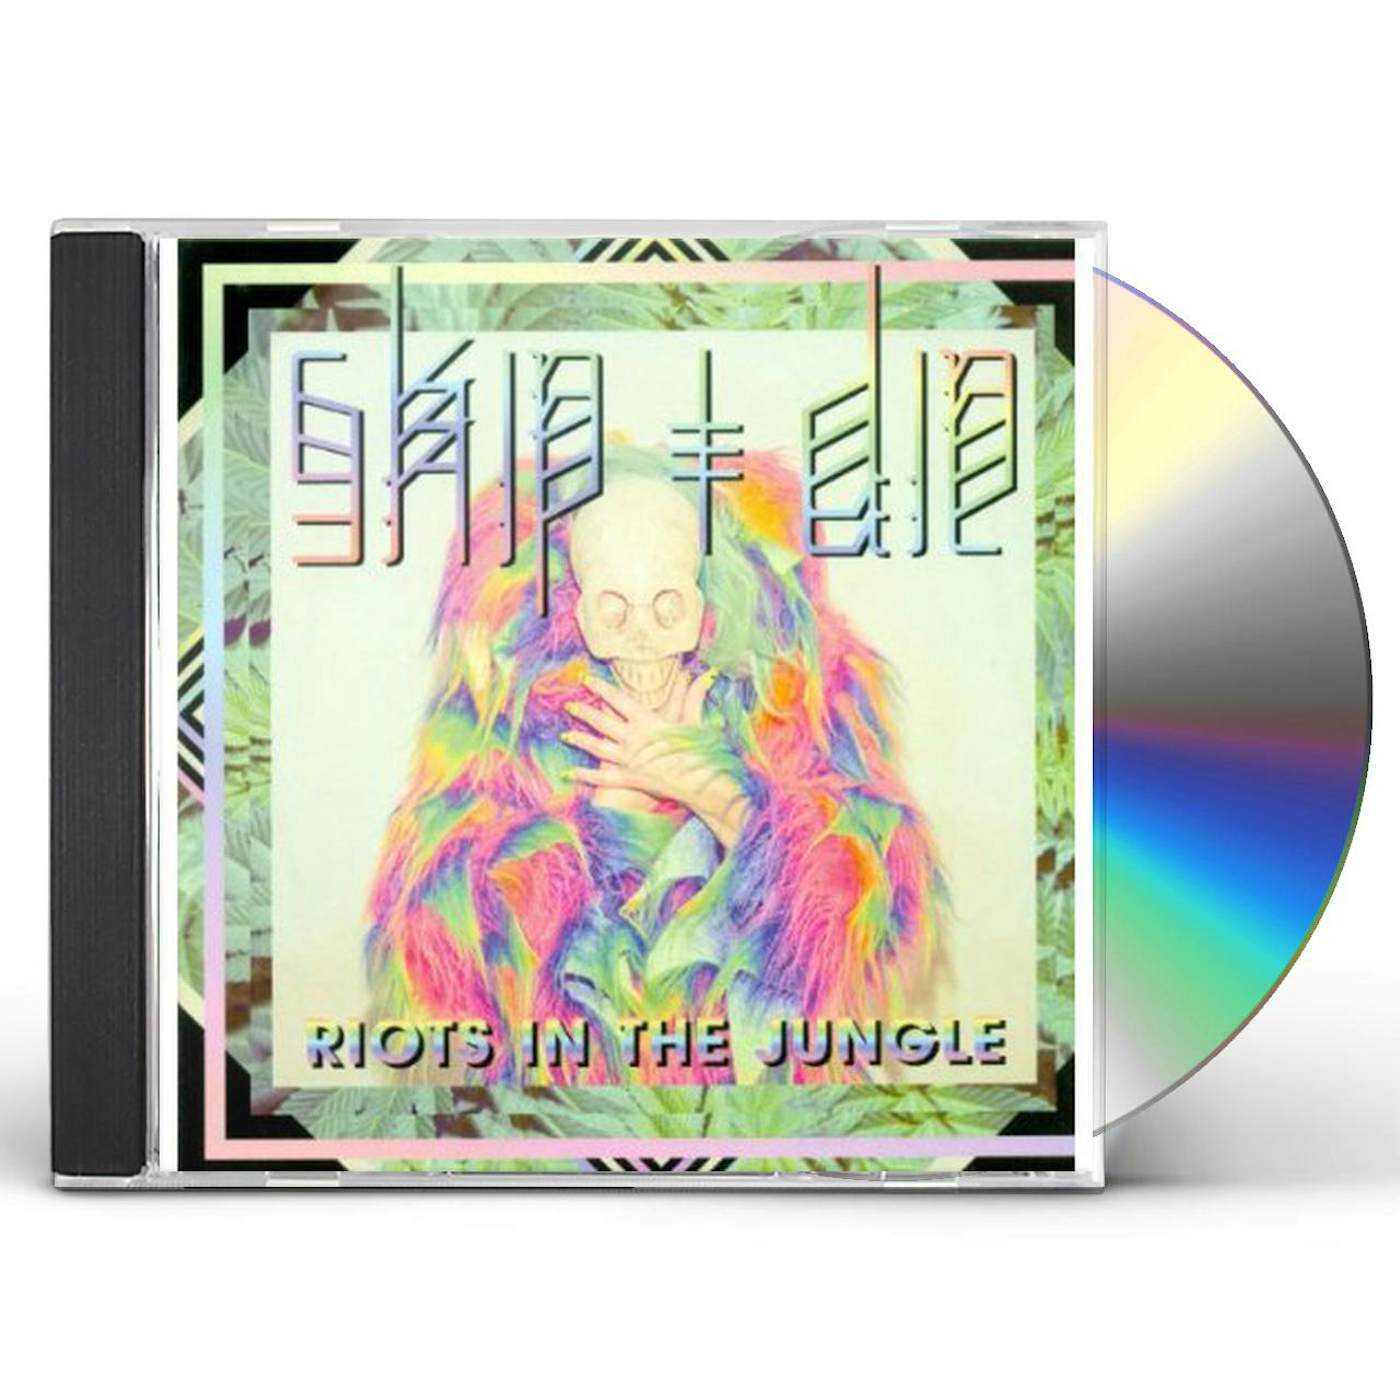 SKIP&DIE RIOTS IN THE JUNGLE (BONUS EDITION) CD